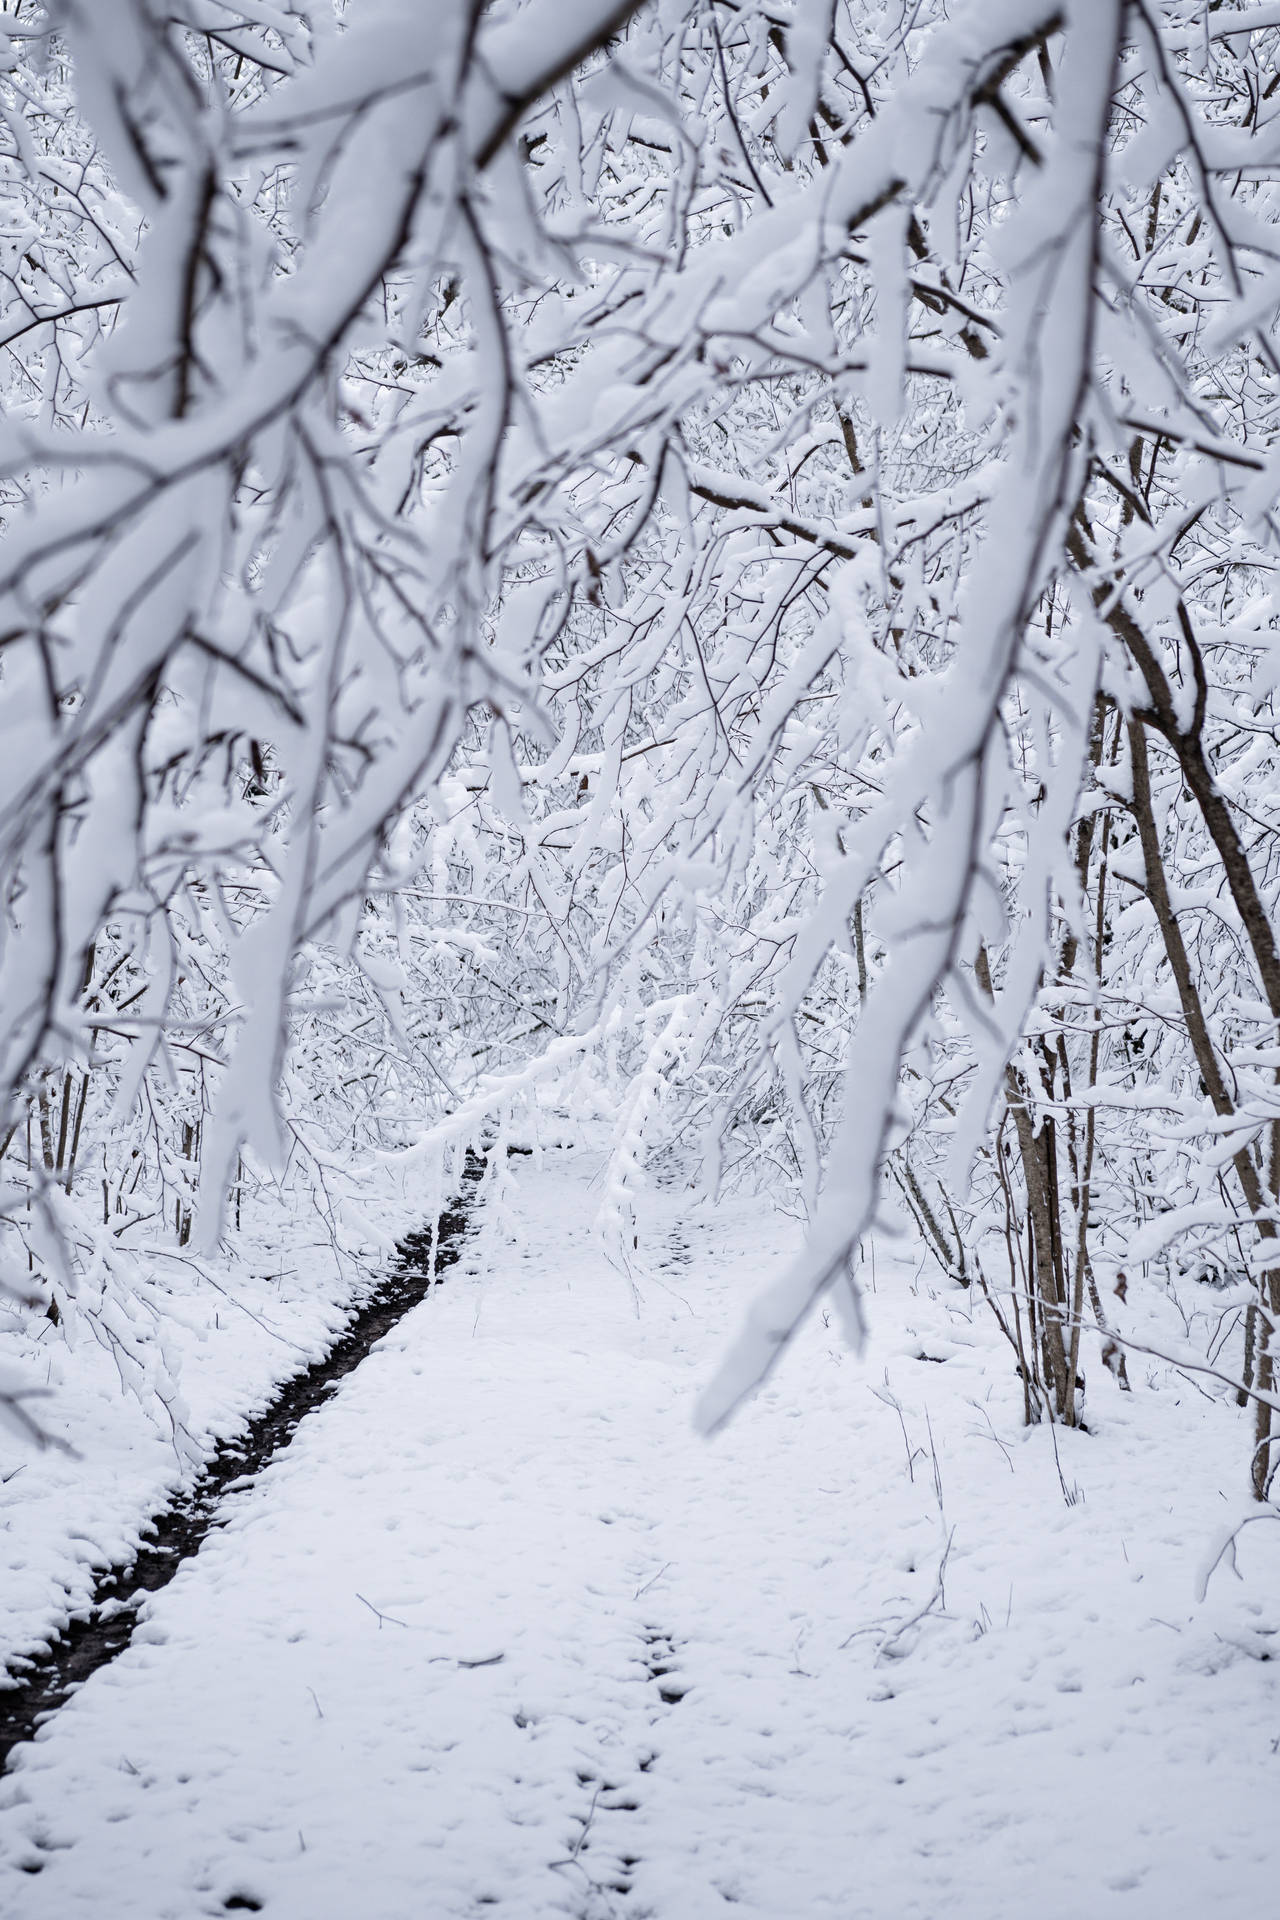 An Idyllic Scene of a Snowy Winter Forest Wallpaper